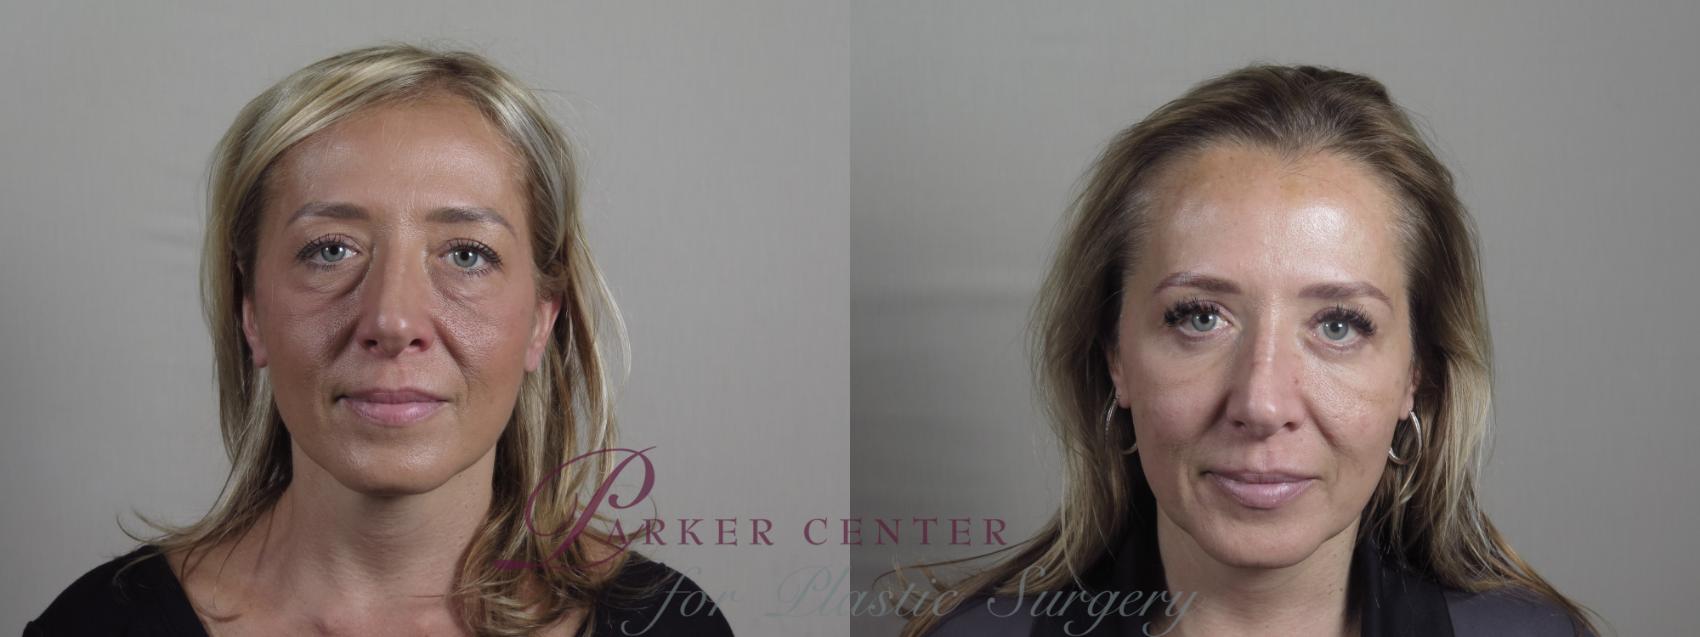 Eyelid Lift Case 1212 Before & After View #1  | Paramus, NJ | Parker Center for Plastic Surgery